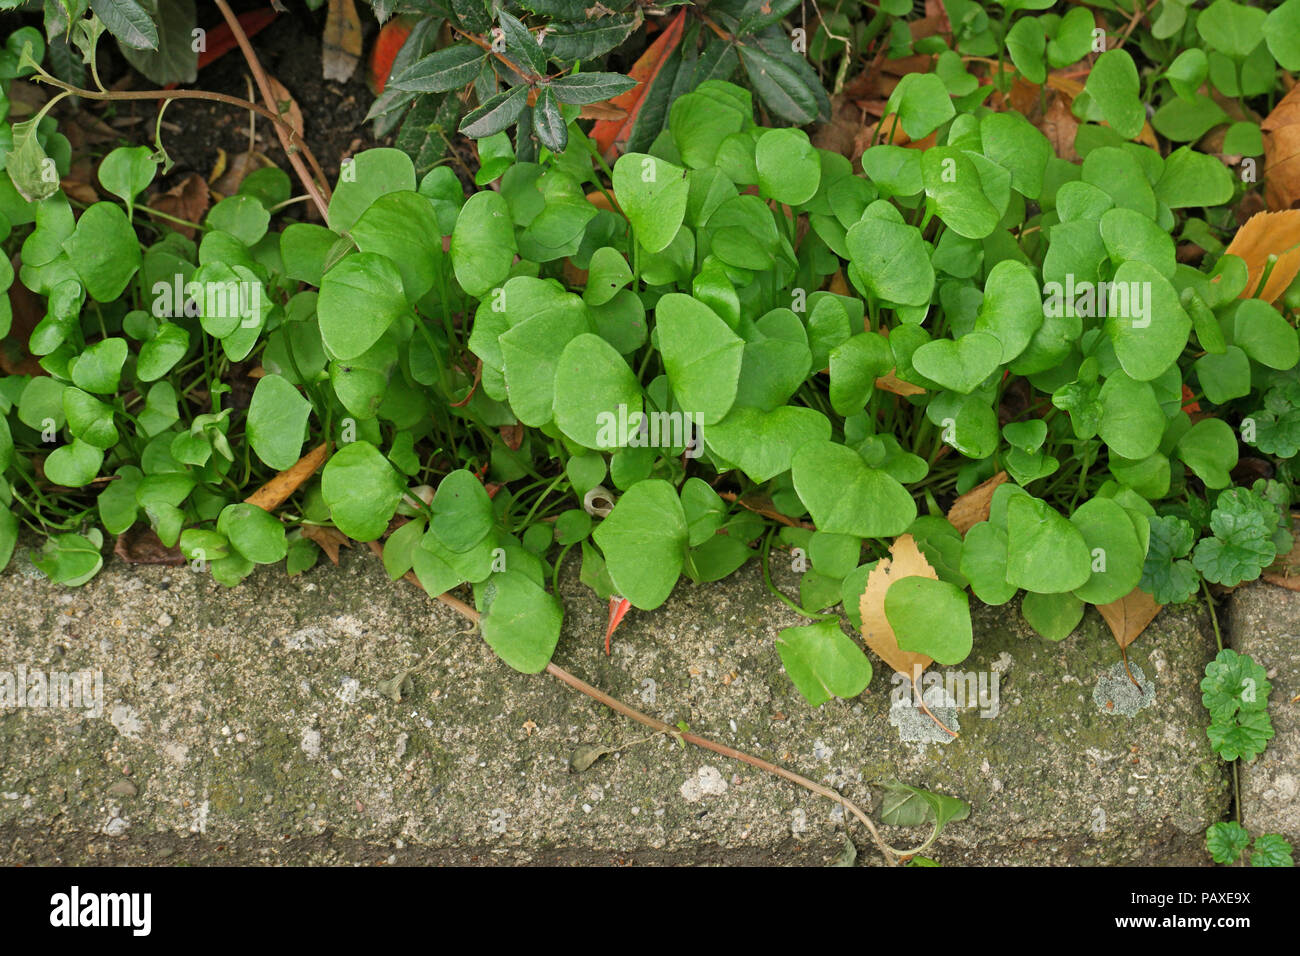 Claytonia perfoliata (Winterportulak) (Indian Lettuce) (claytonia perfoliée) Stock Photo